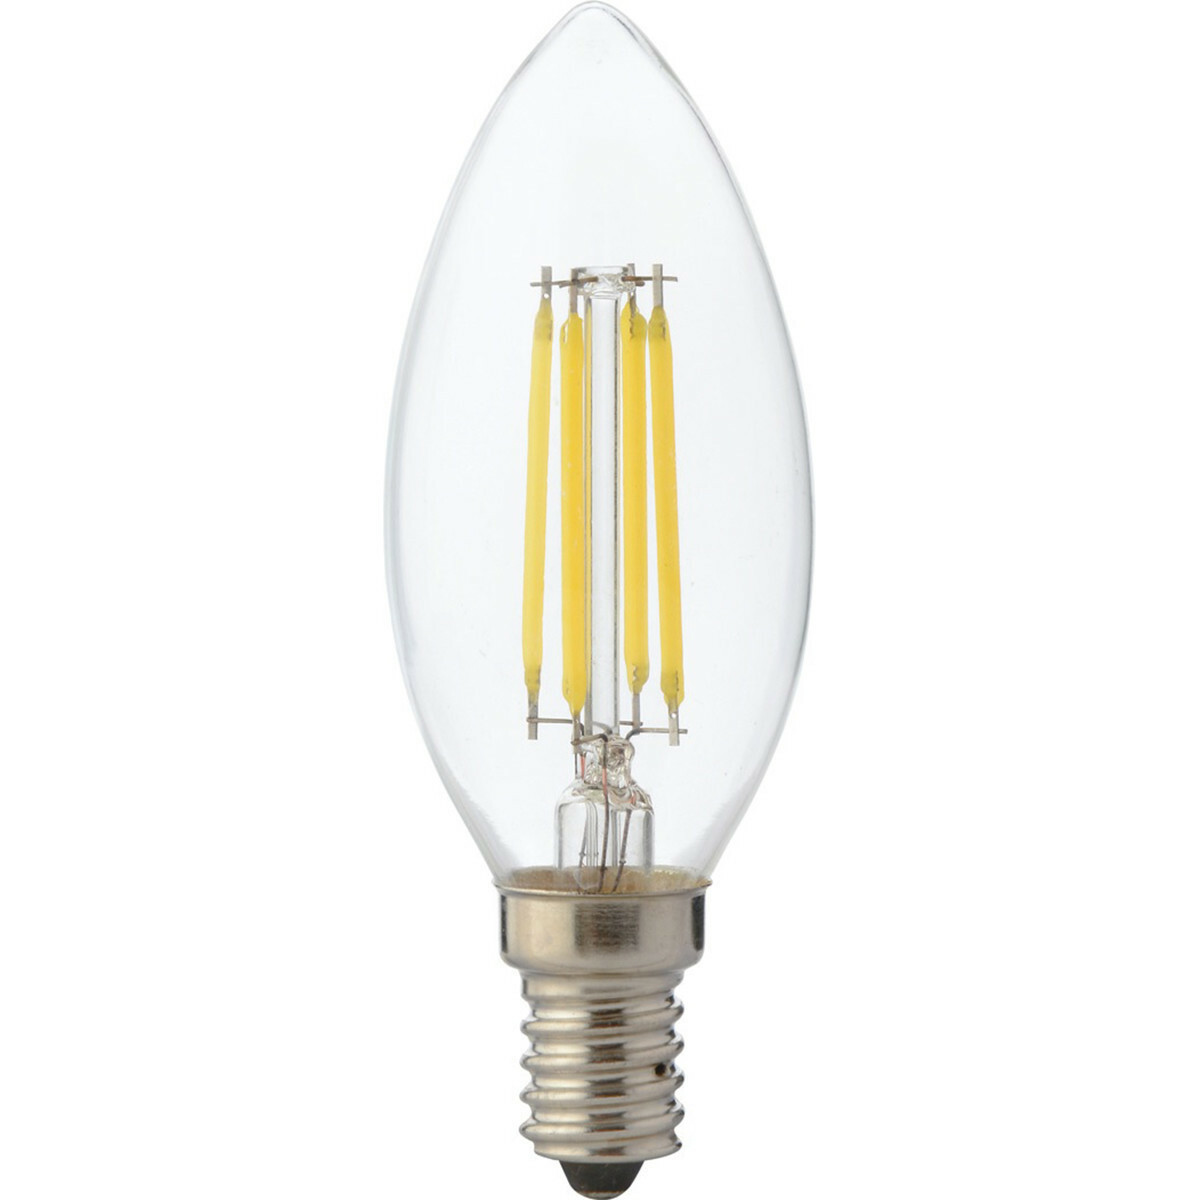 Bot toetje Ontspannend LED Lamp - Kaarslamp - Filament - E14 Fitting - 6W Dimbaar - Warm Wit 2700K  | BES LED